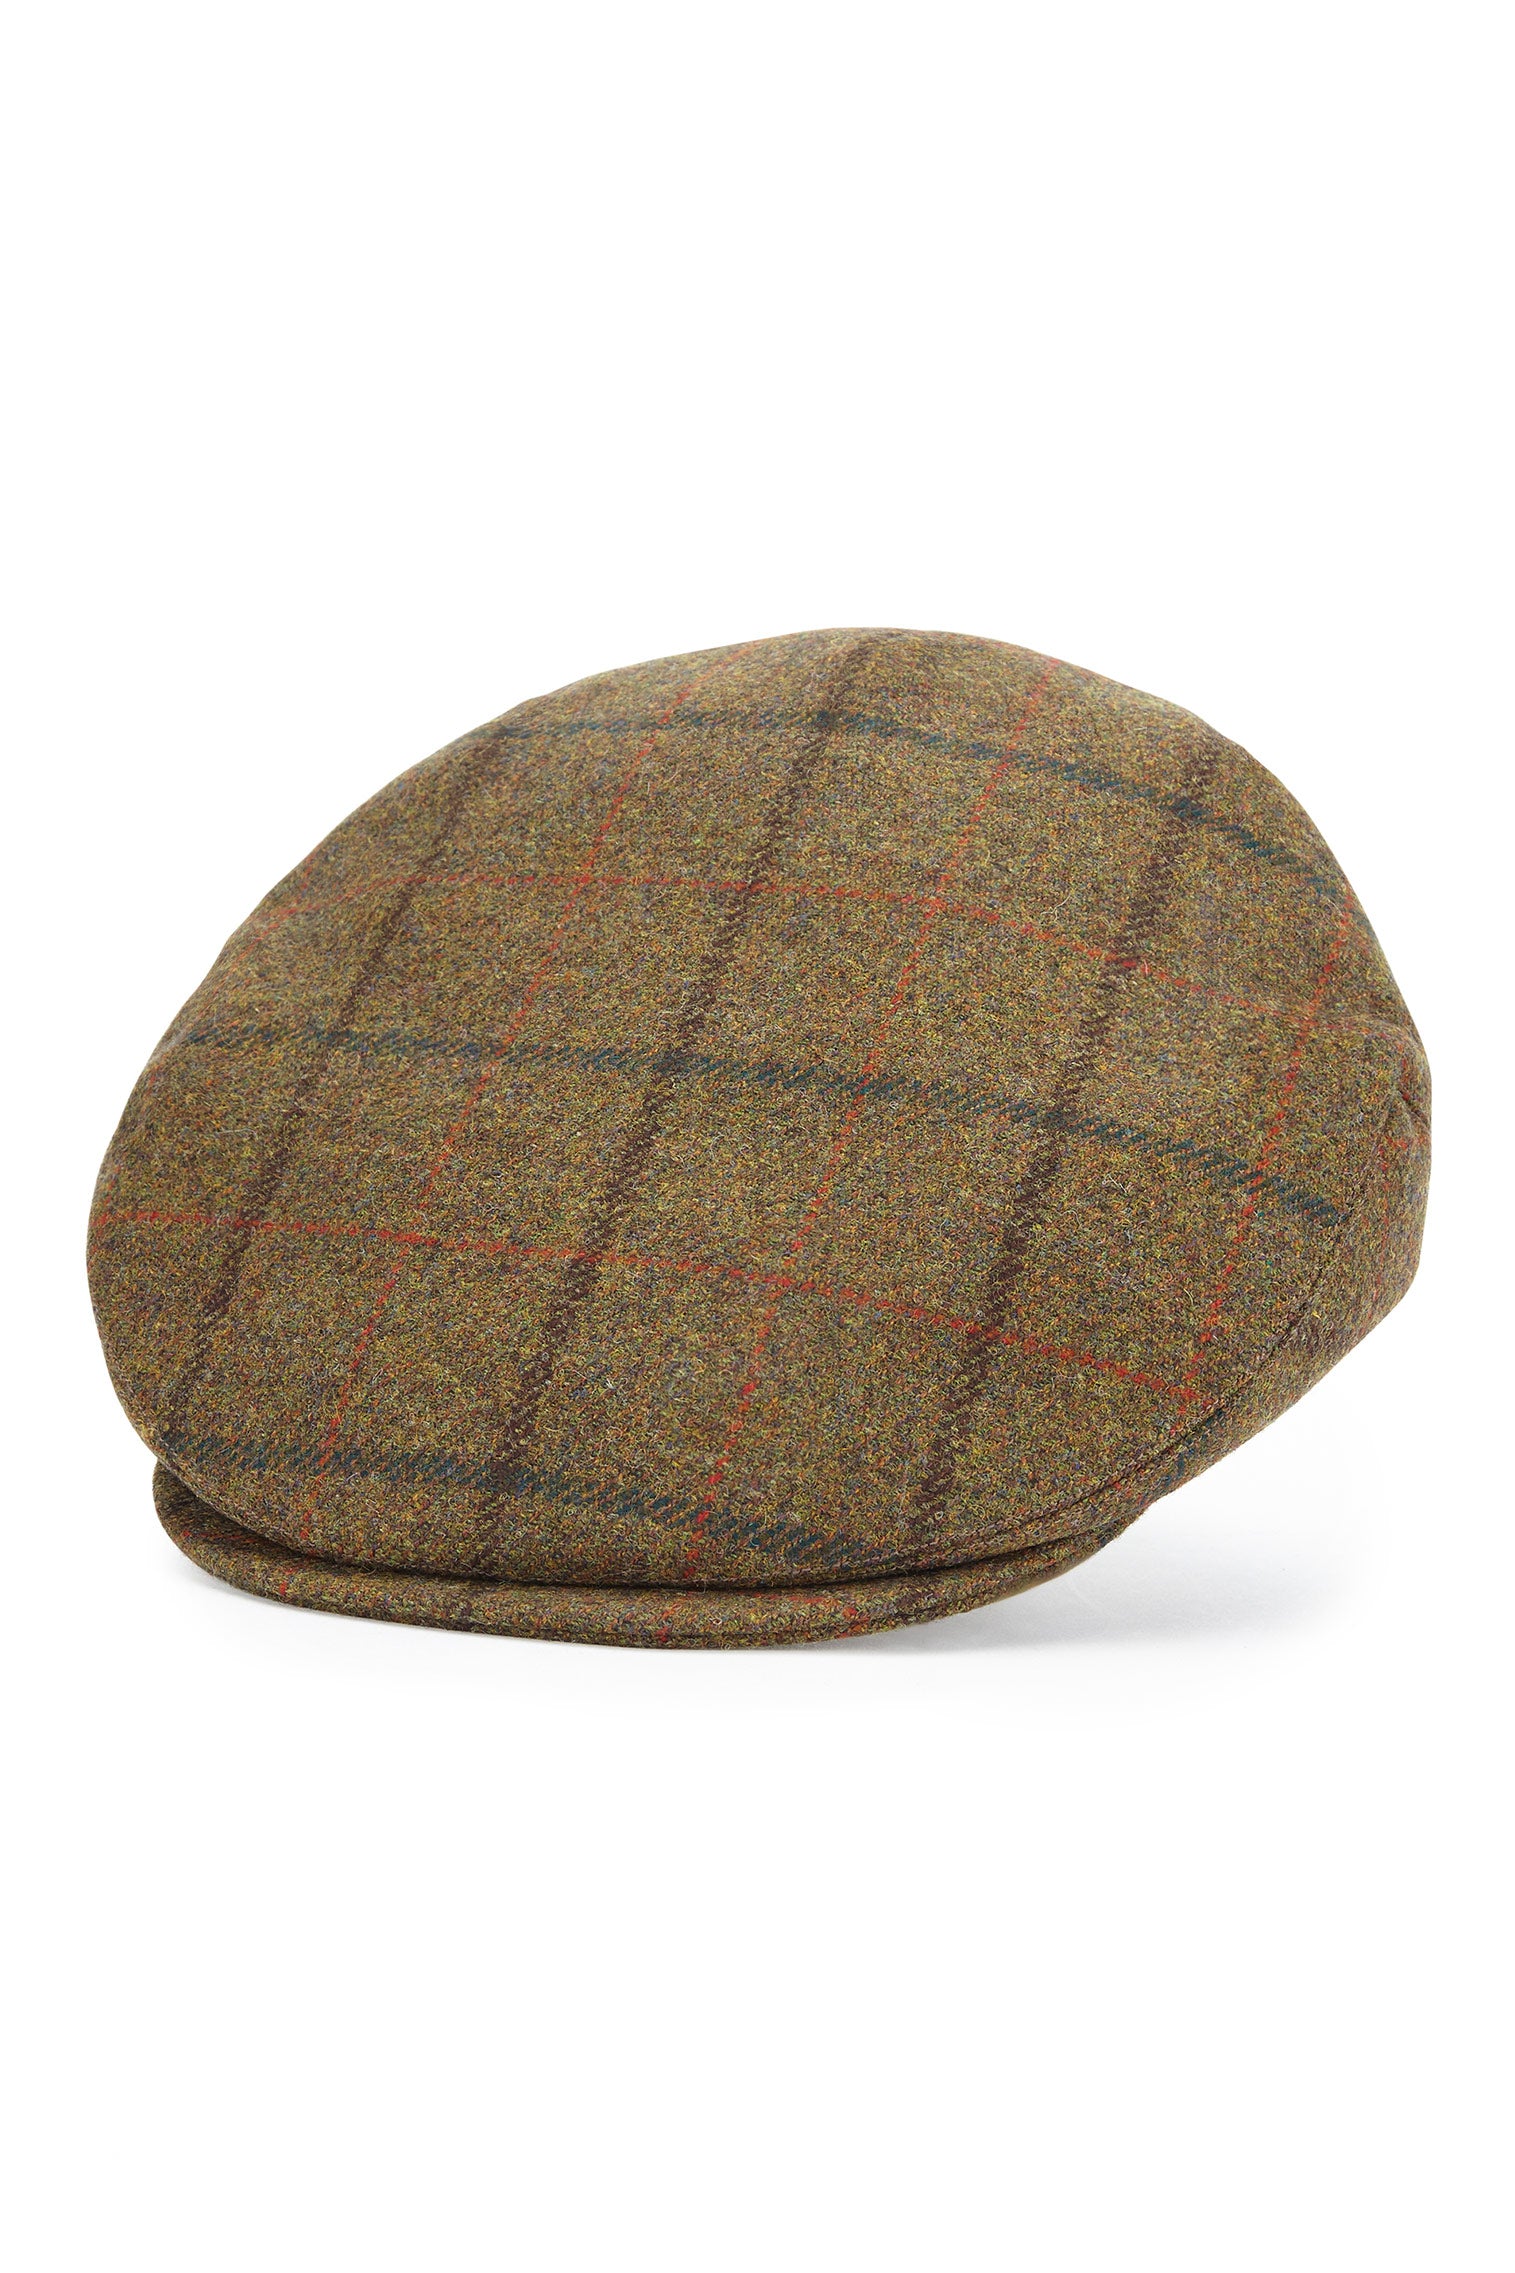 Turnberry Tweed Flat Cap - Men's Hats - Lock & Co. Hatters London UK